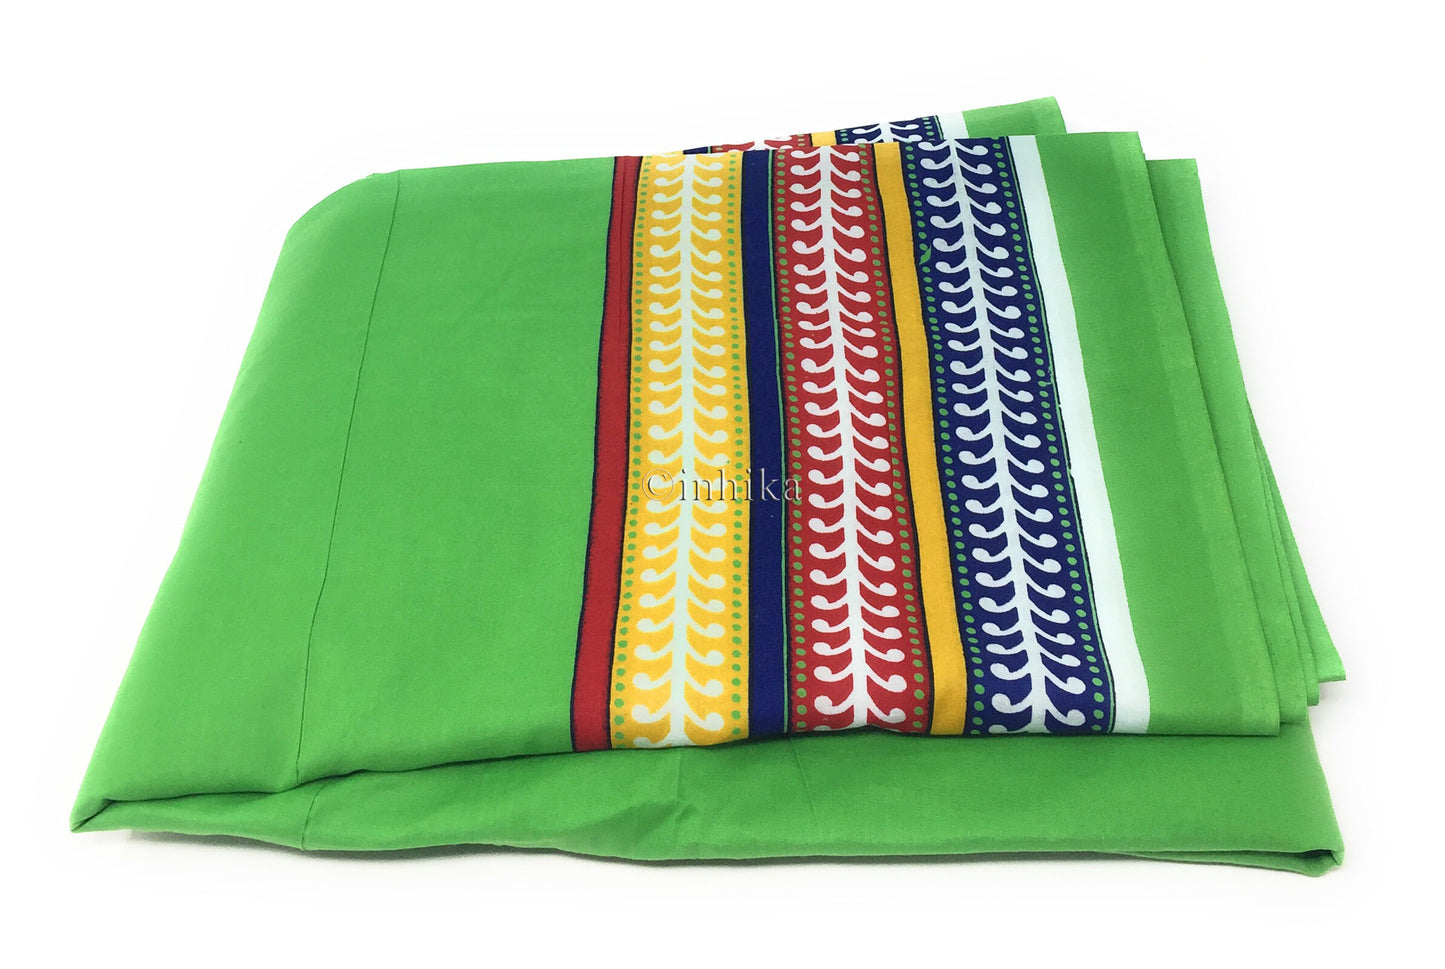 Pure Cotton, Printed colour fast fabric, solid green, multicolour panel